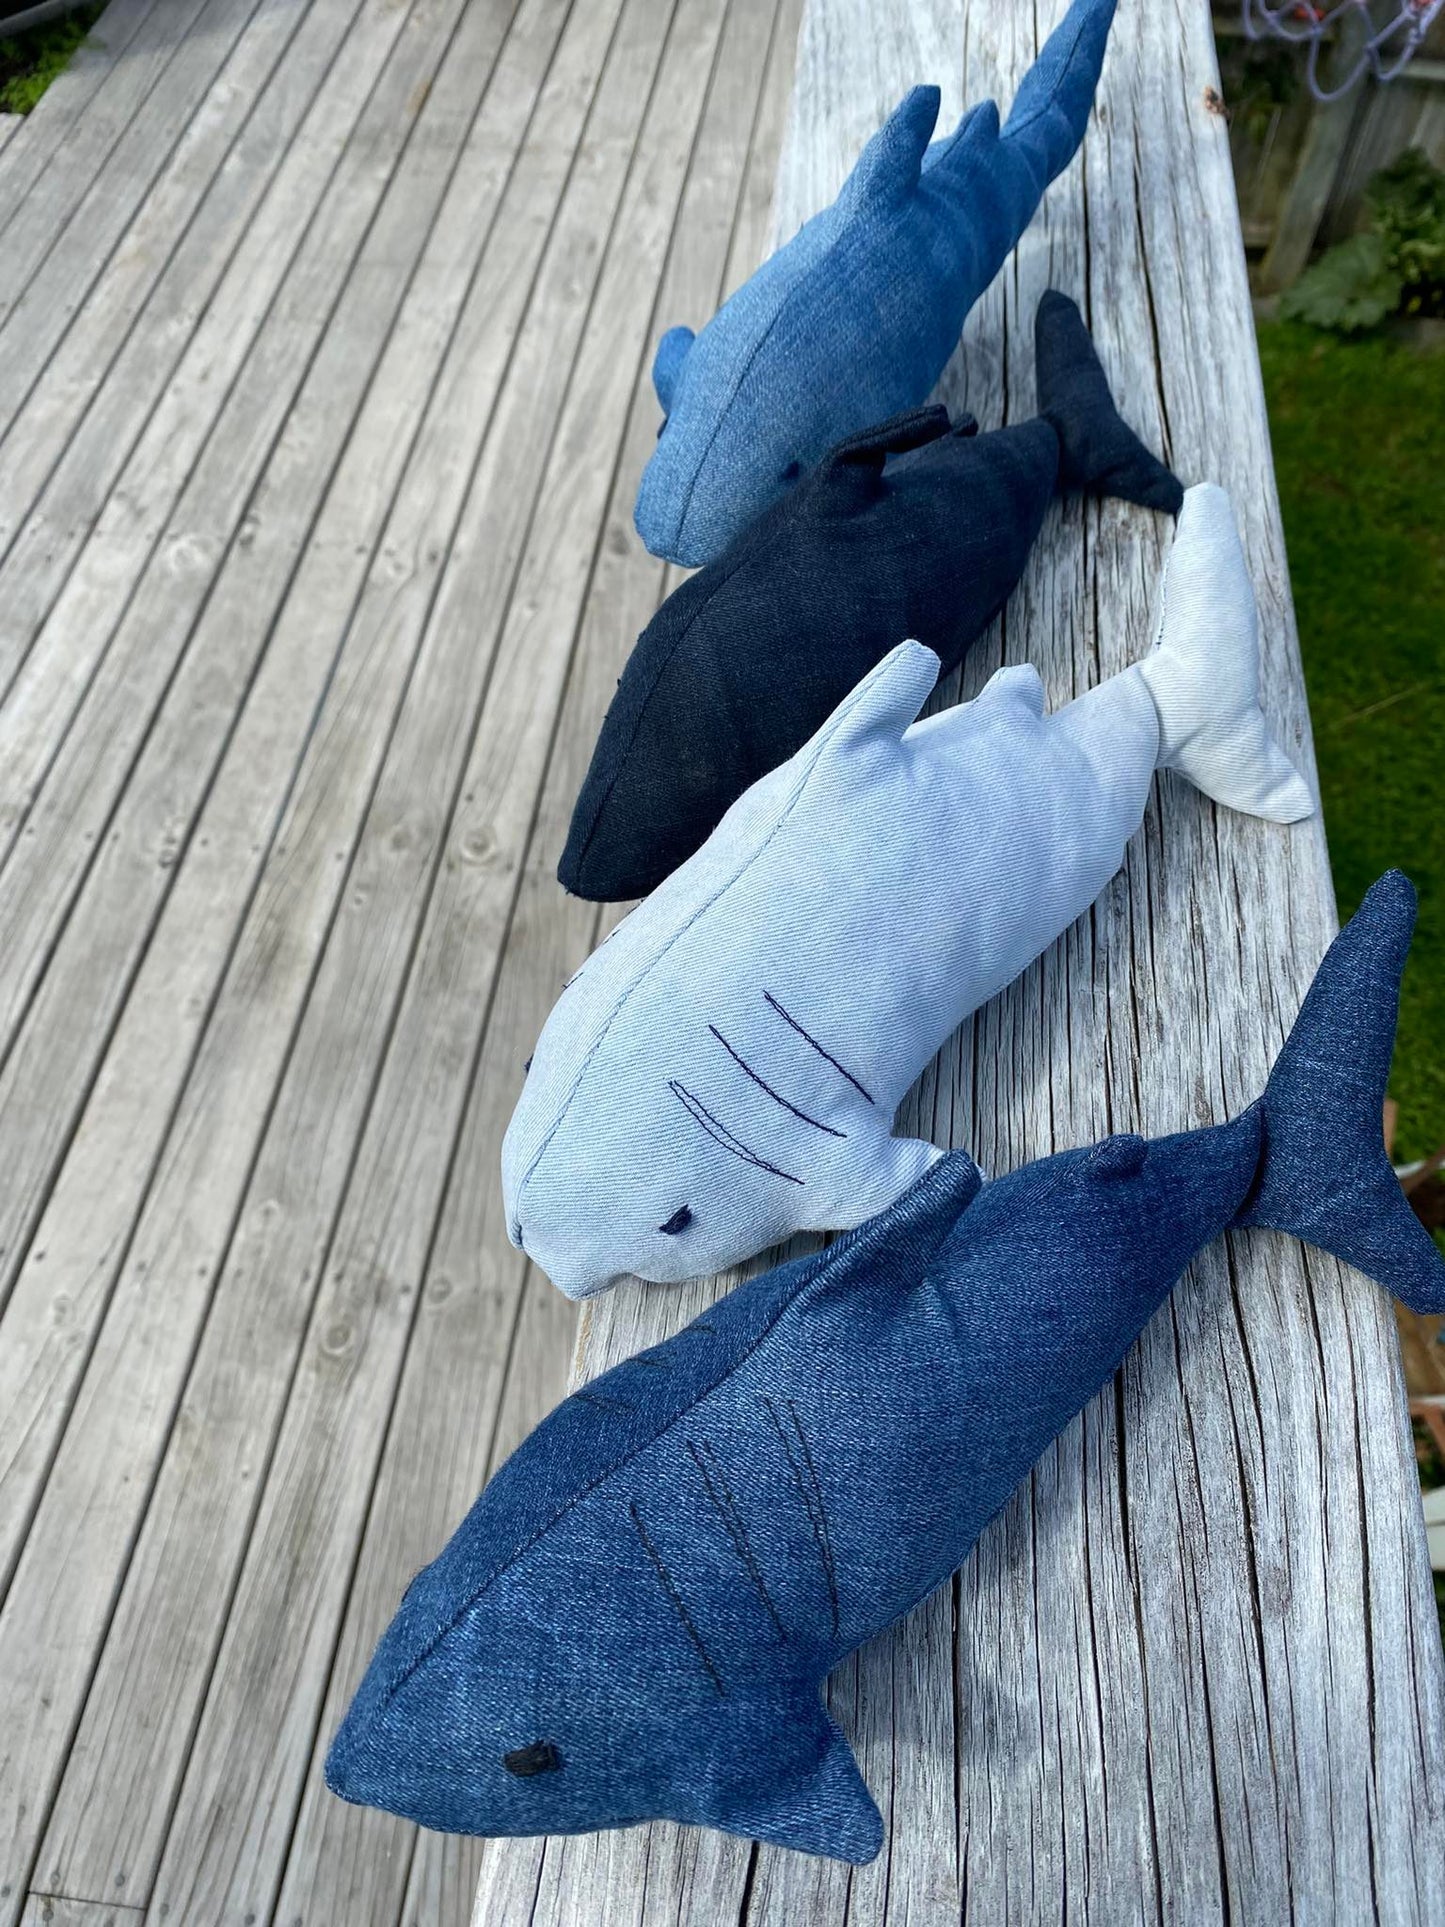 Denim Shark Sewing Pattern